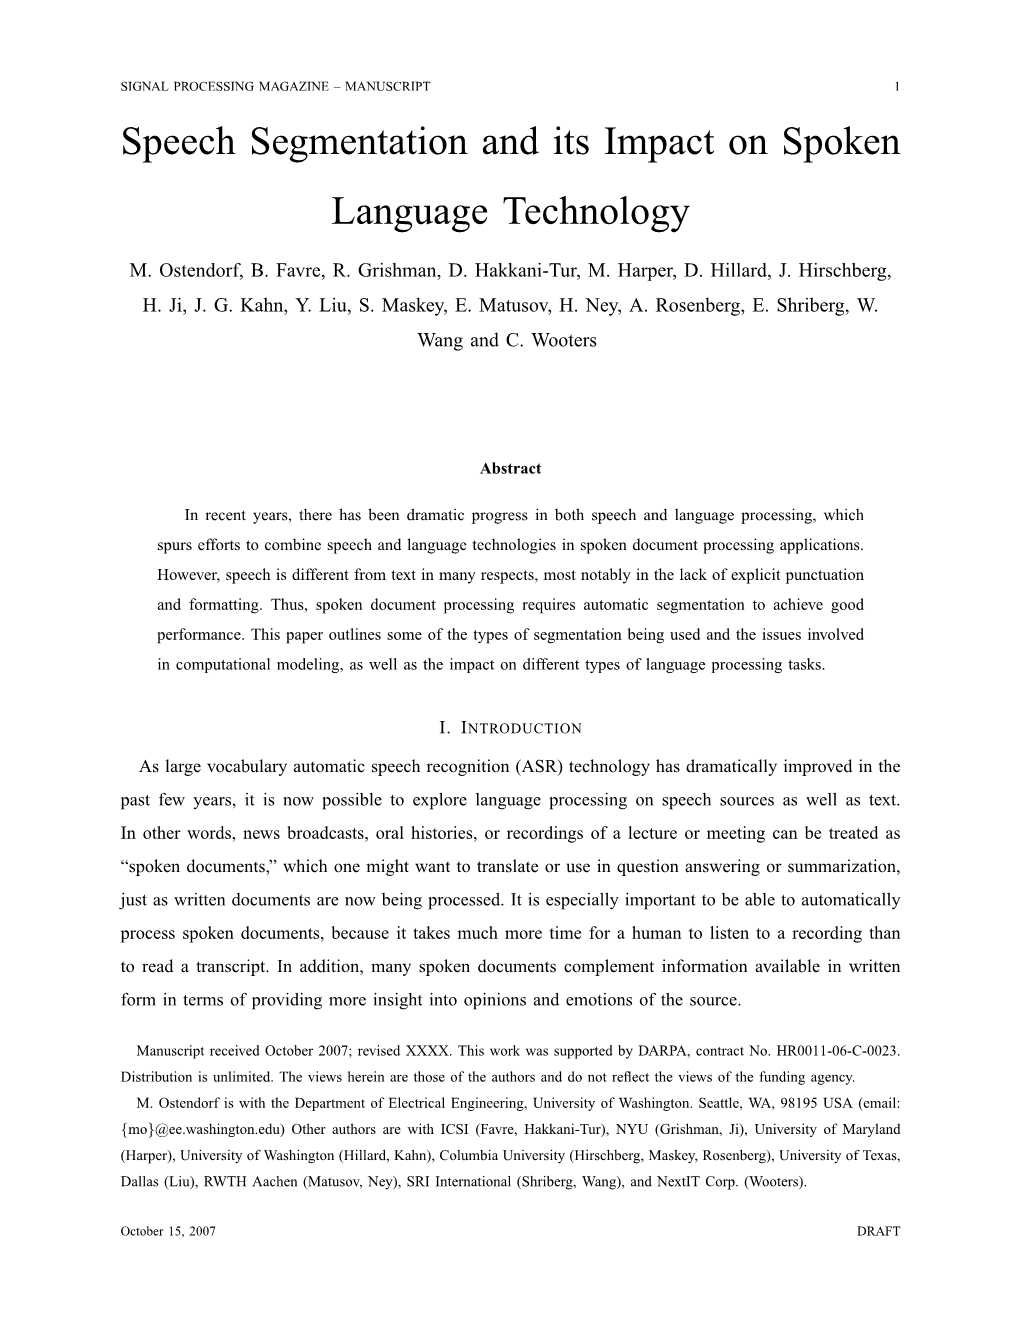 Speech Segmentation and Spoken Document Processing